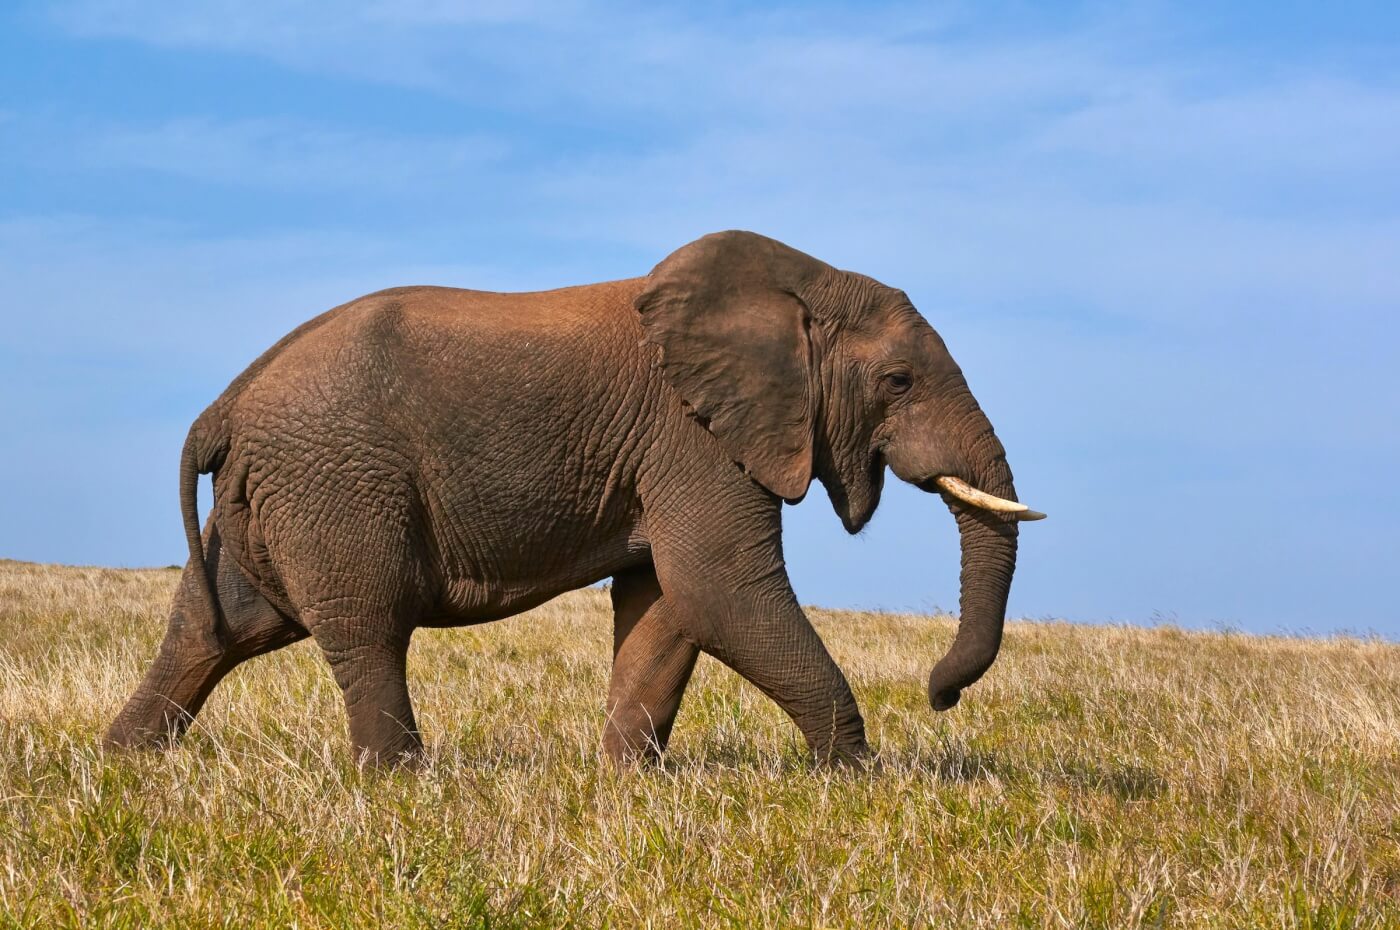 An elephant walking through a field